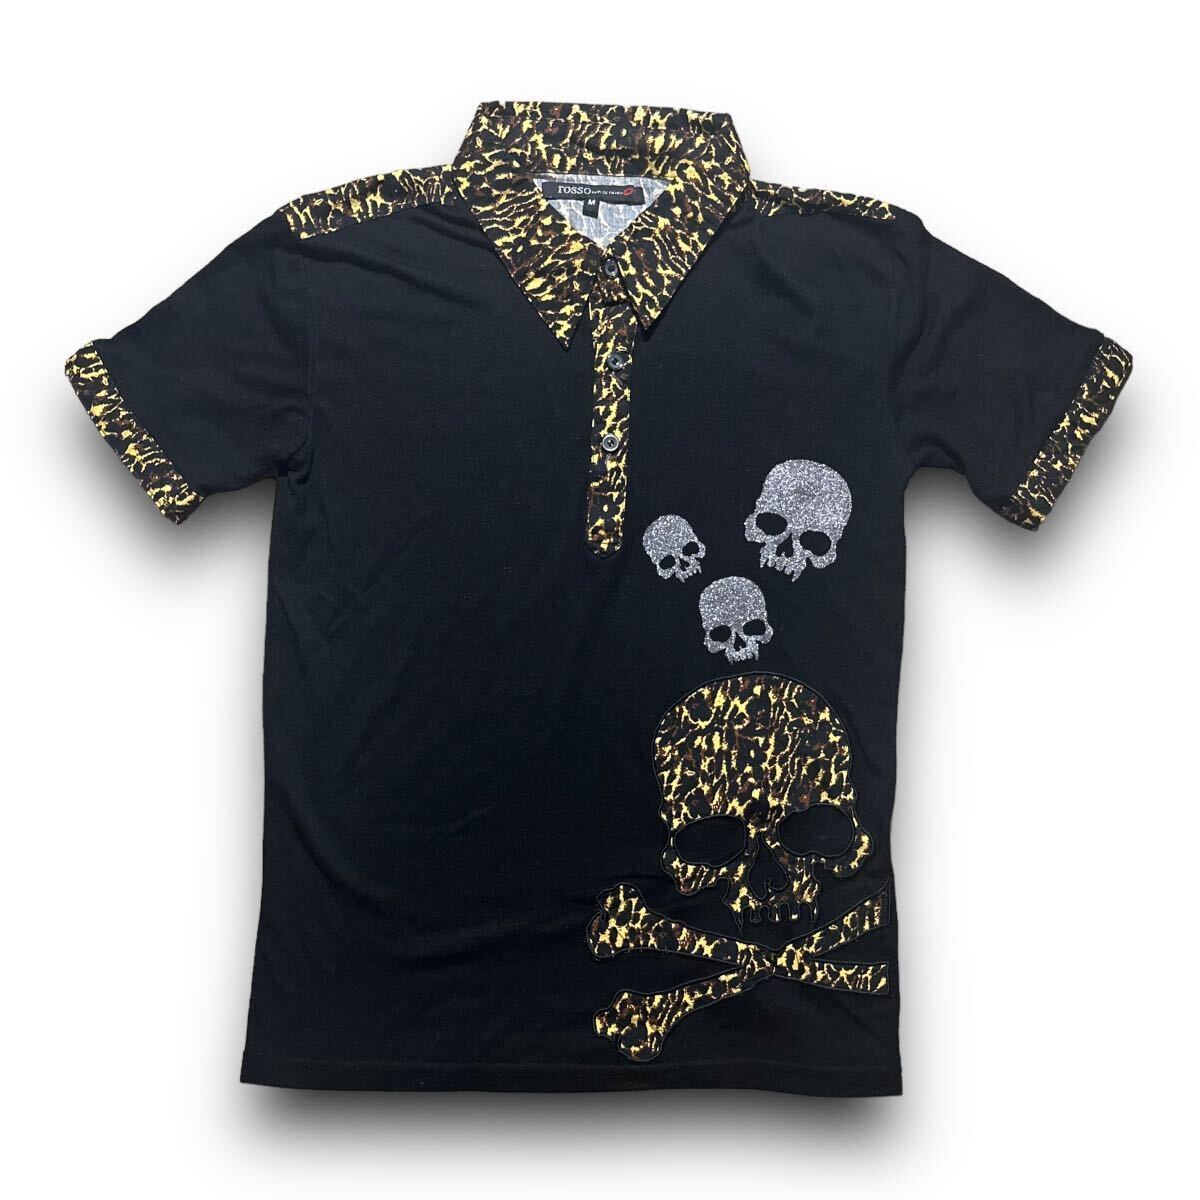 Rare 00s Japanese Label Y2K design skull shirt 14th addiction share spirit ifsixwasnine kmrii lgb goa obelisk backlash civarize _画像1